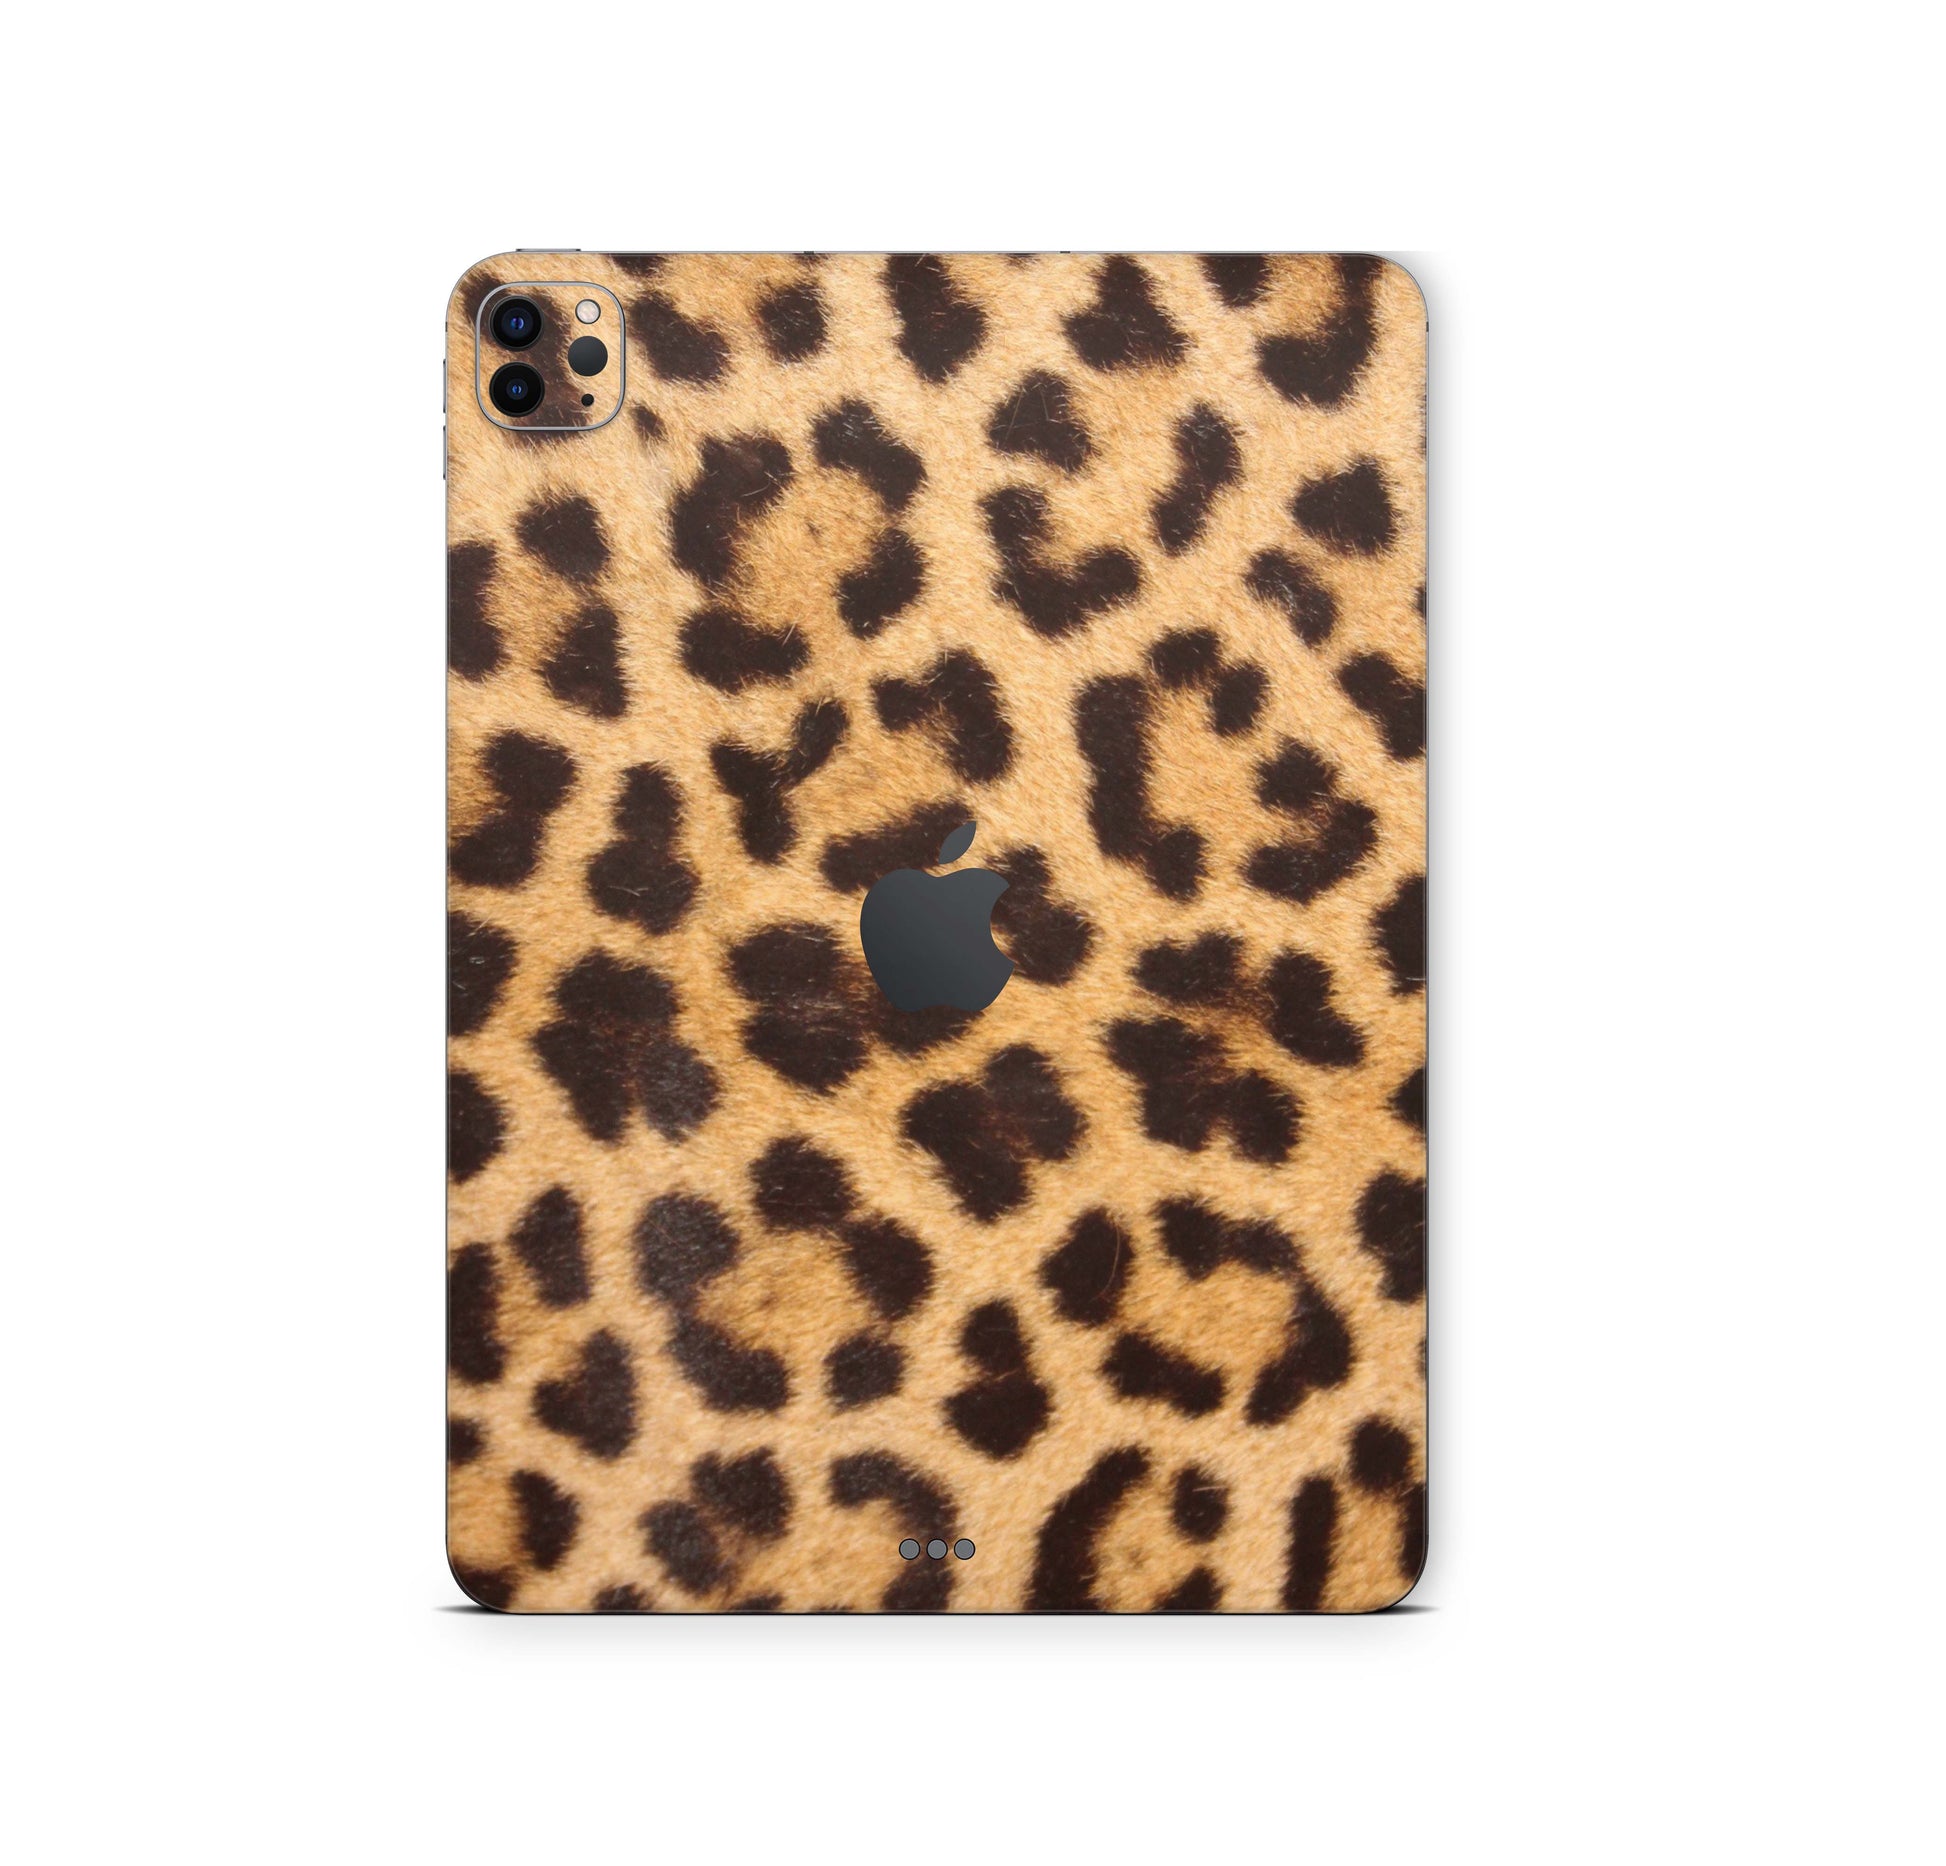 iPad Pro Skin 11" 2.Generation A2228 Design Cover Folie Vinyl Skins & Wraps Aufkleber Skins4u Leopardenfell  